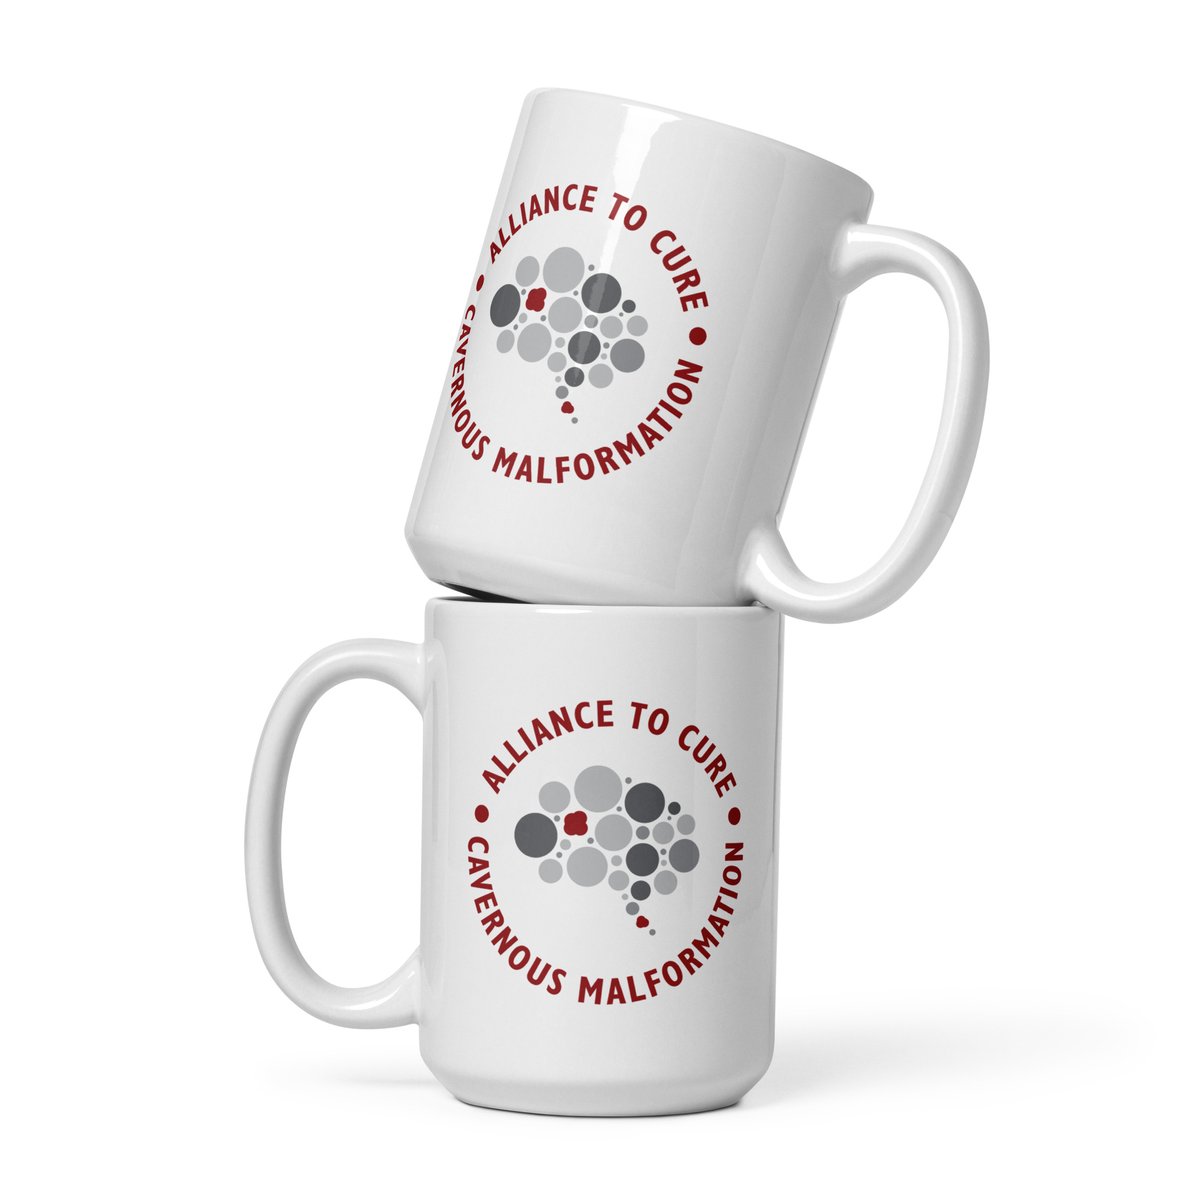 Image of Alliance to Cure White glossy mug